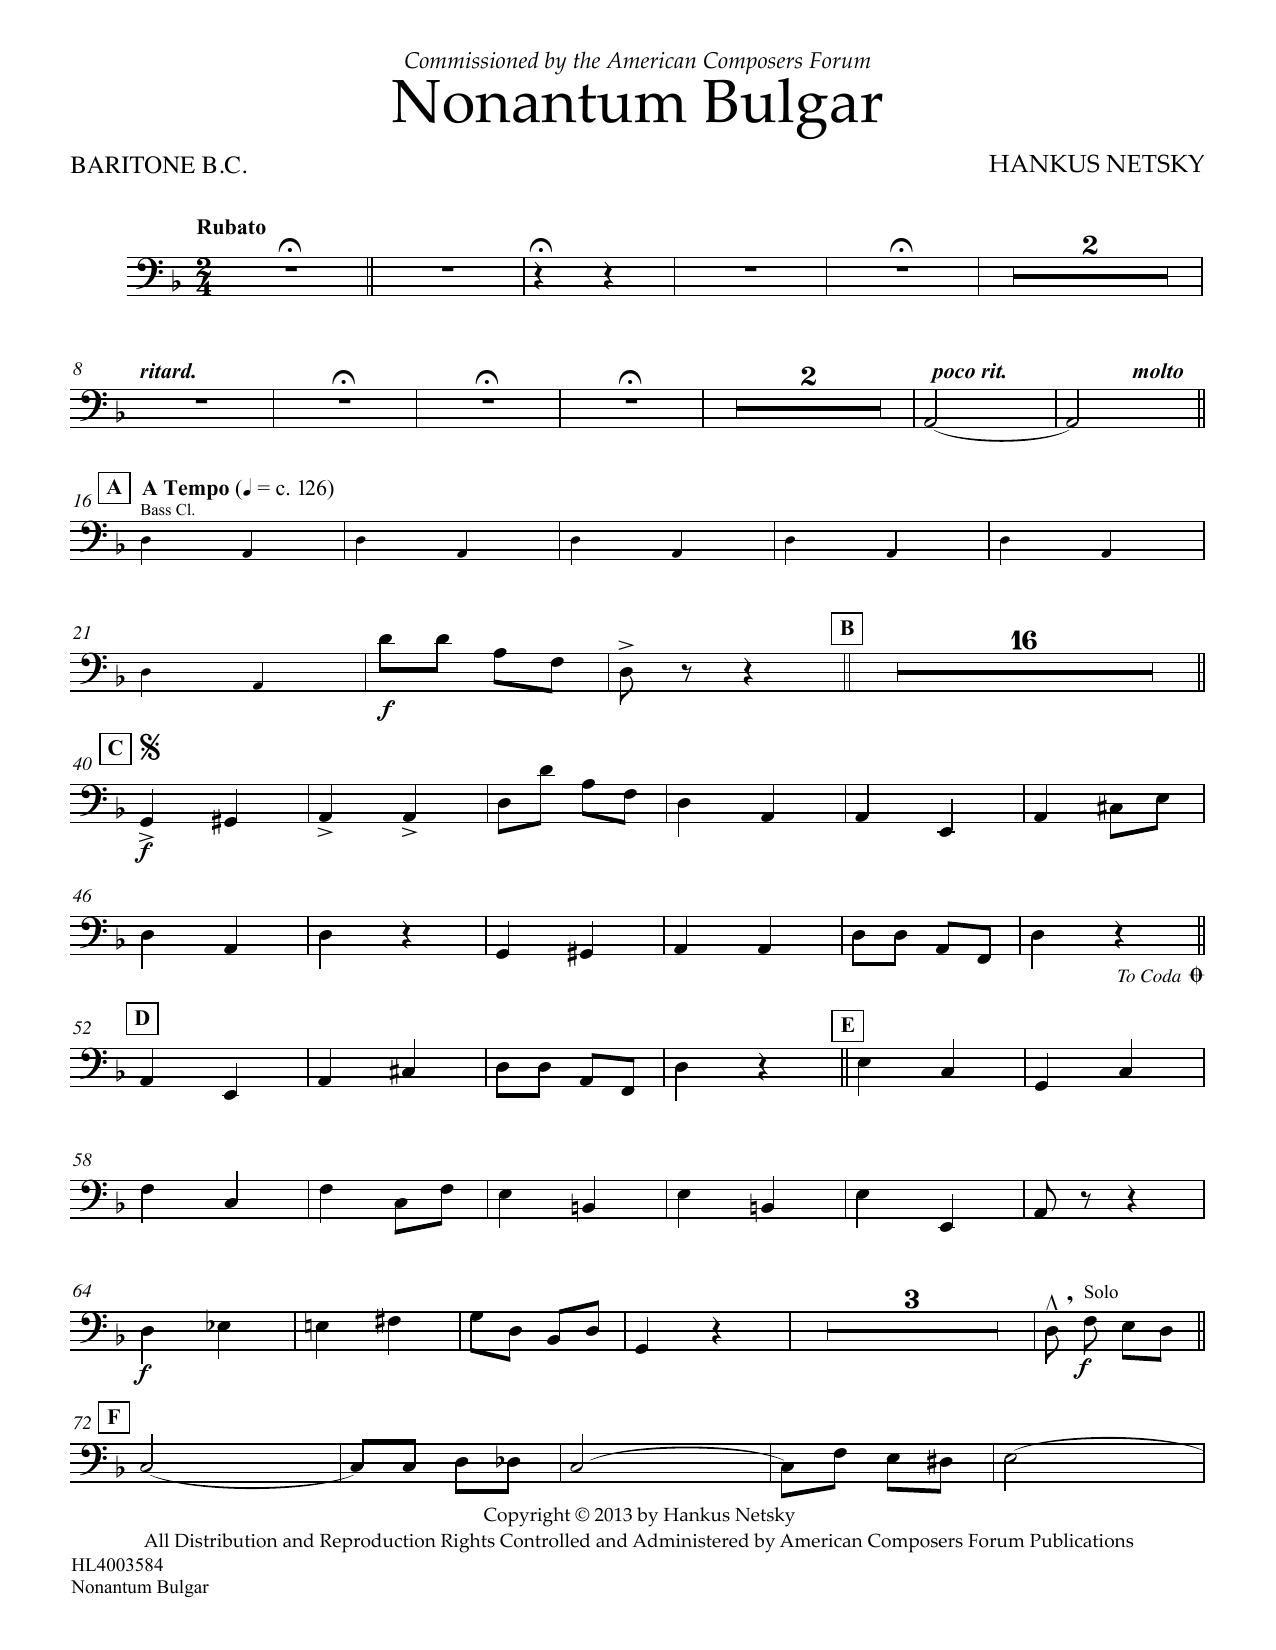 Hankus Netsky Nonantum Bulgar - Baritone B.C. Sheet Music Notes & Chords for Concert Band - Download or Print PDF